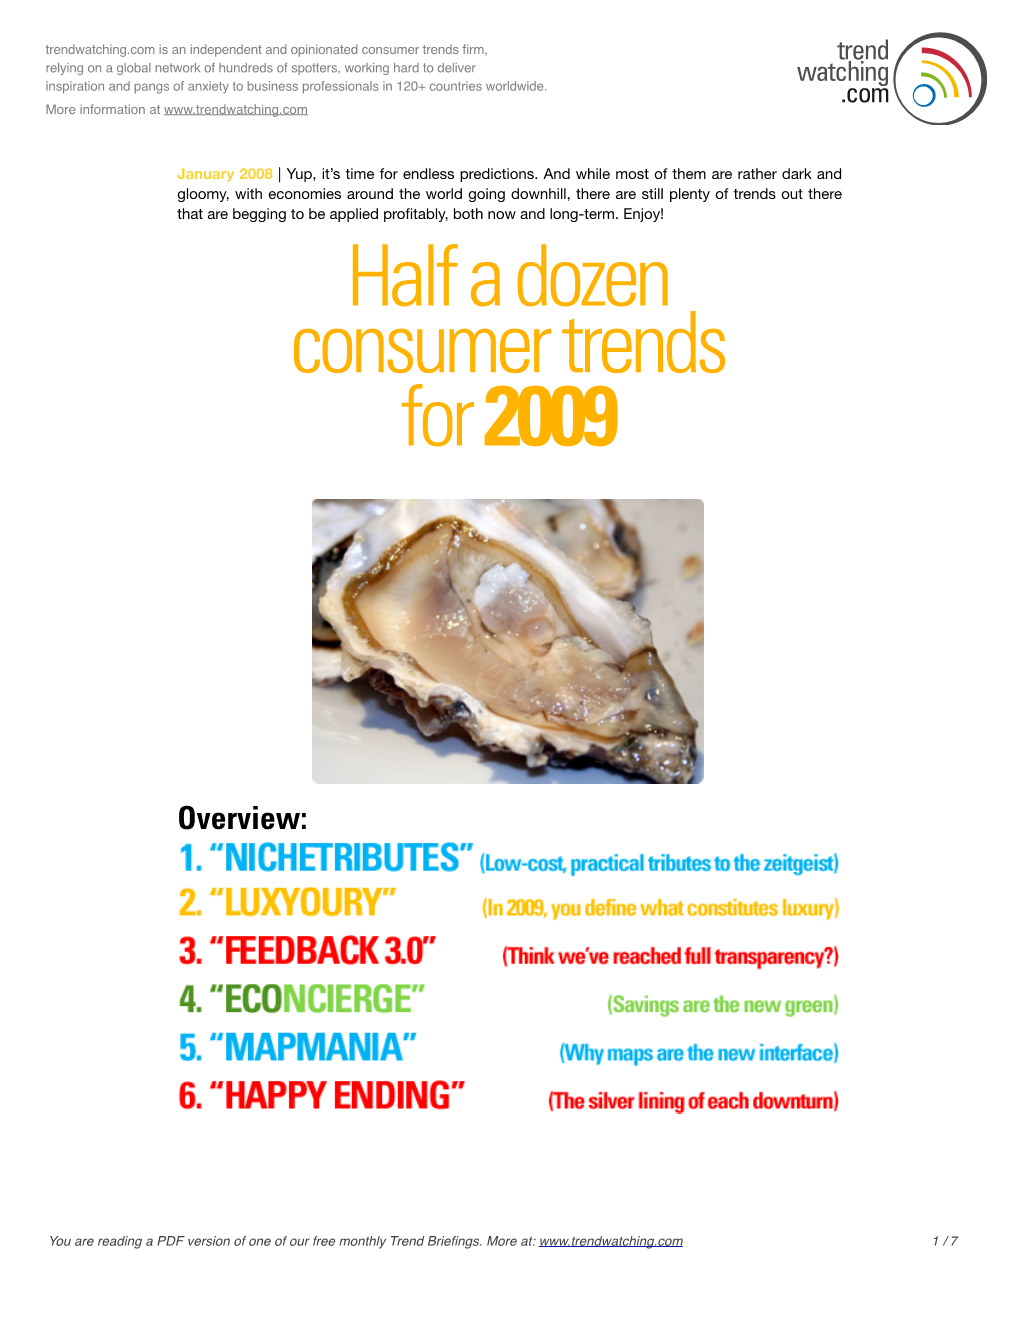 Half a Dozen Consumer Trends for 2009